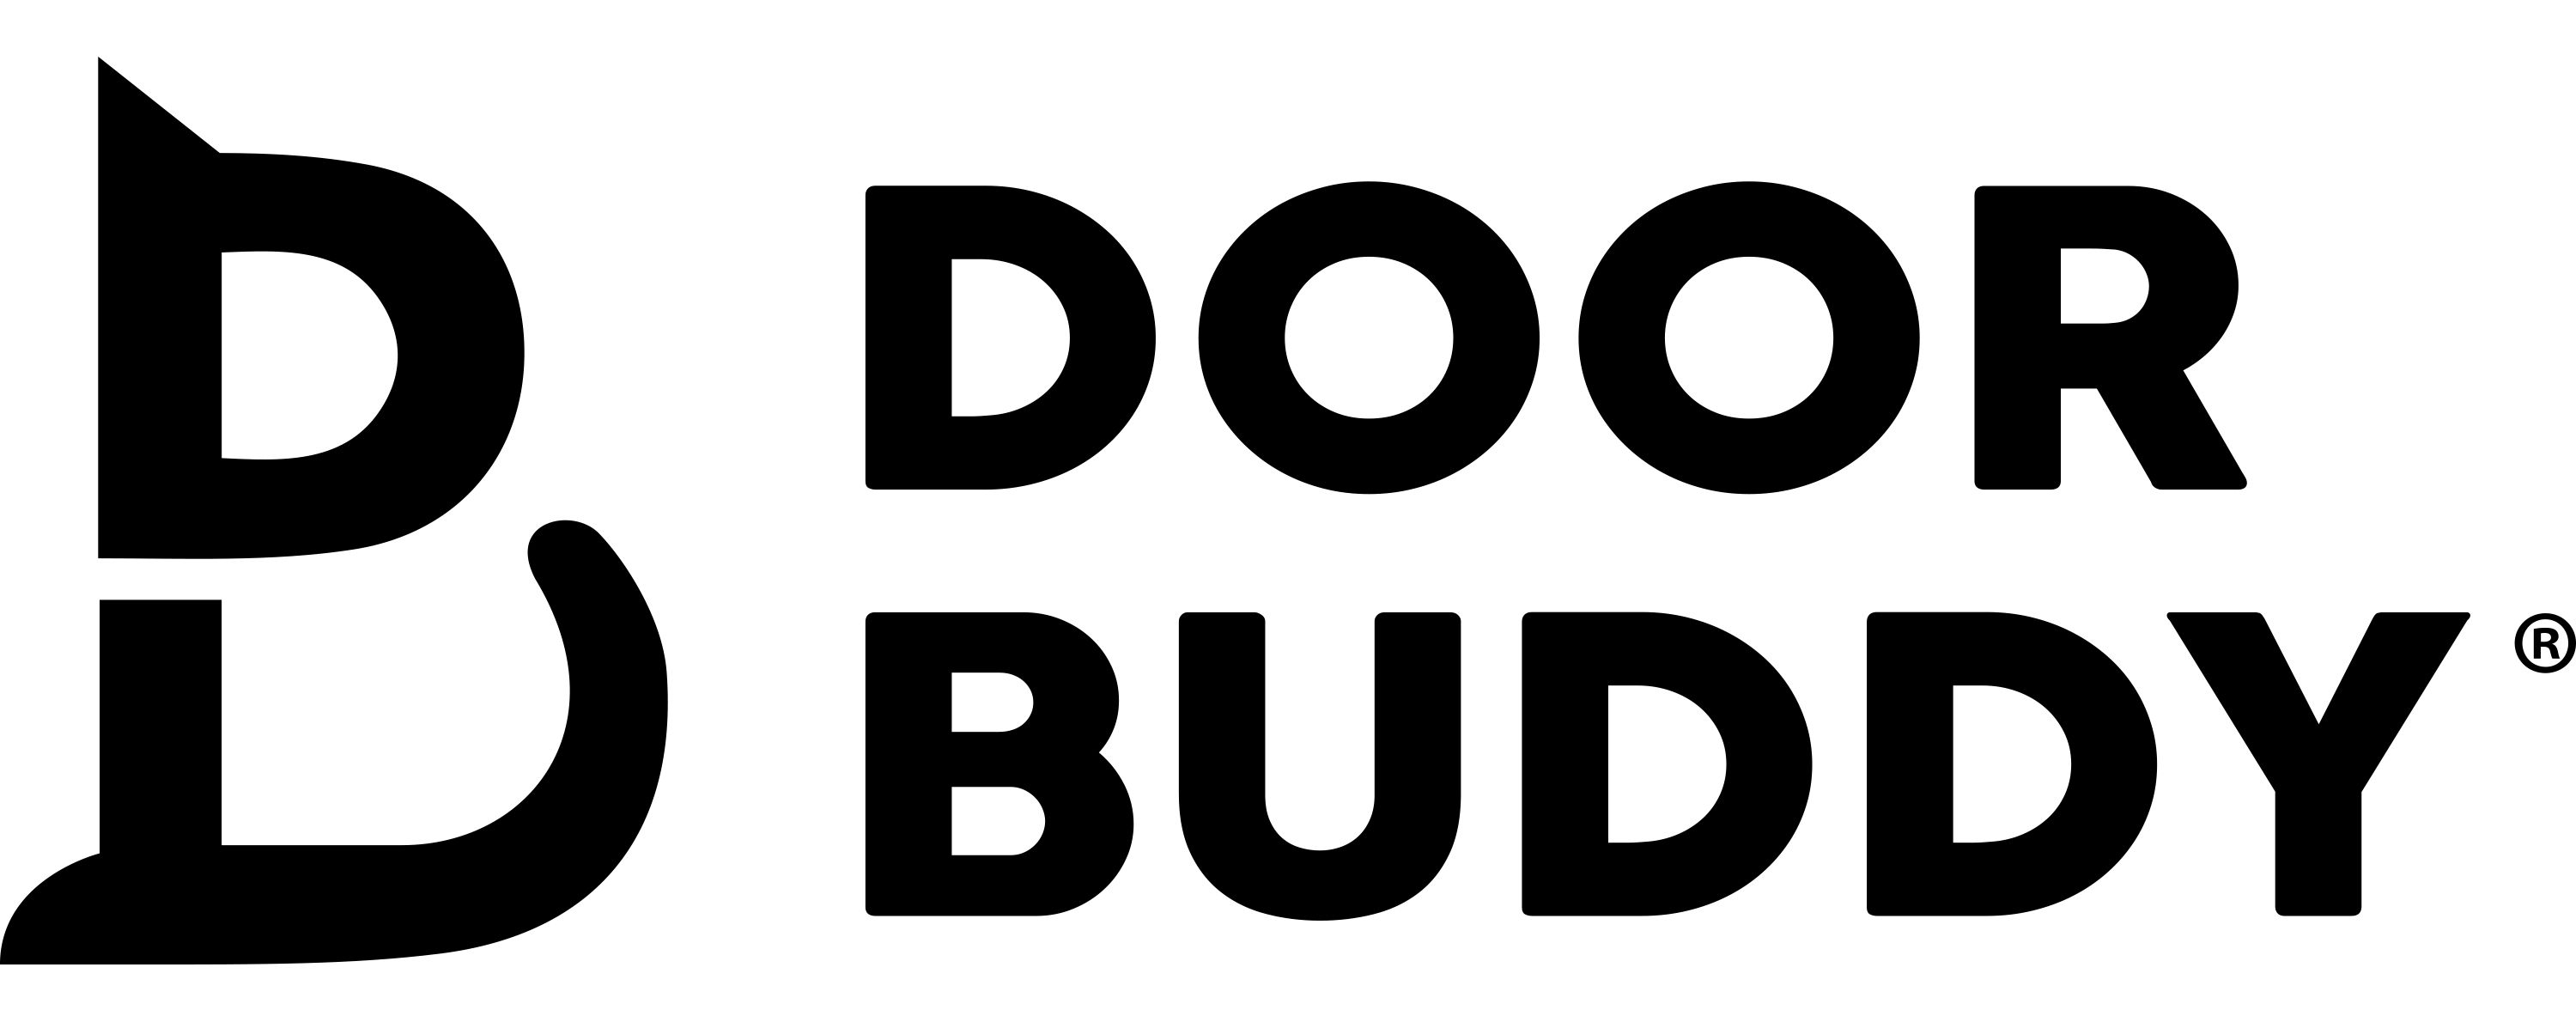 Hinge Buddy Portable Door Stop - Lodging Kit Company